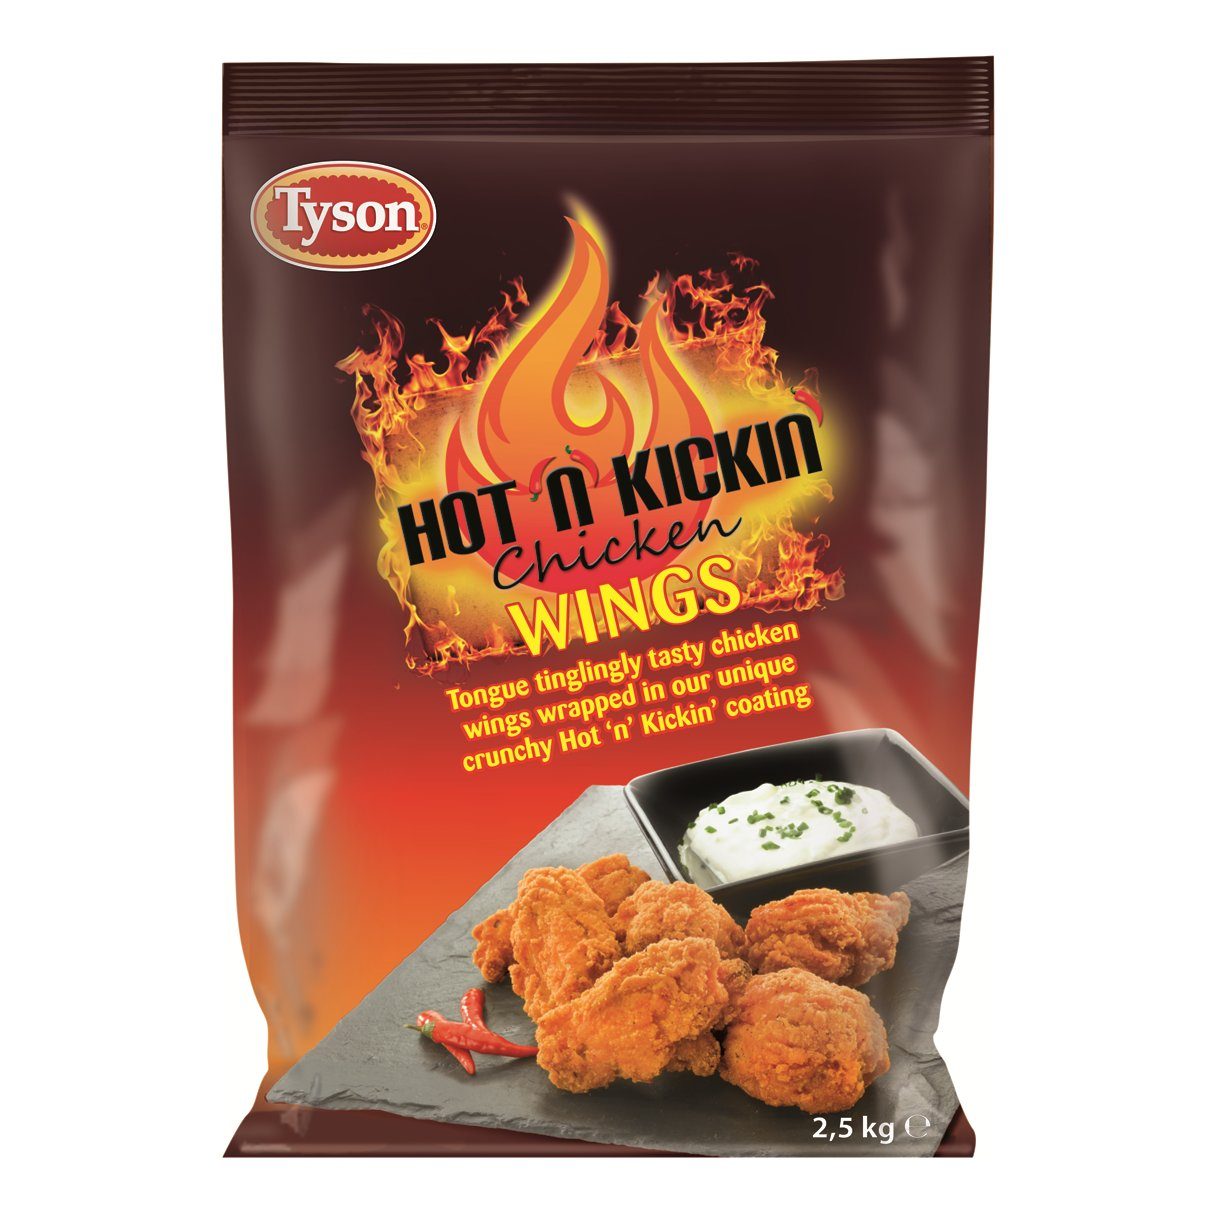 Hot 'n' kicking chicken wings